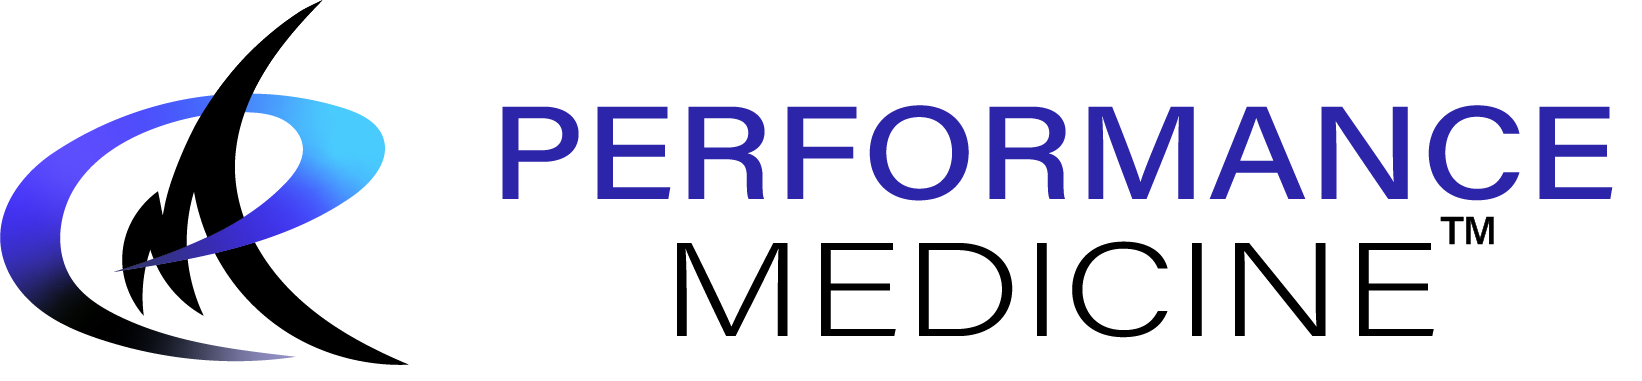 Performance Medicine™ Logo